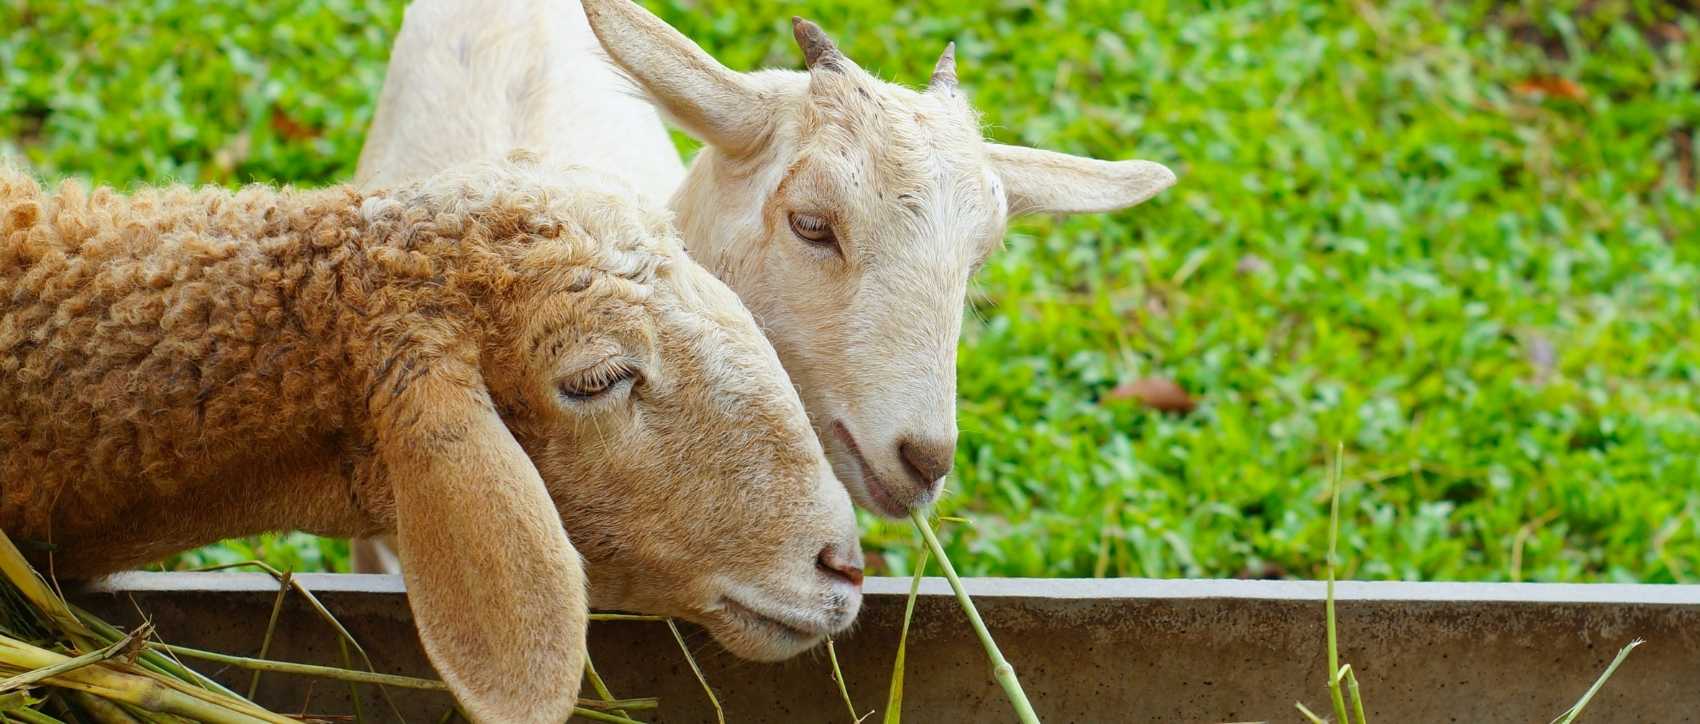 Moutons qui mangent